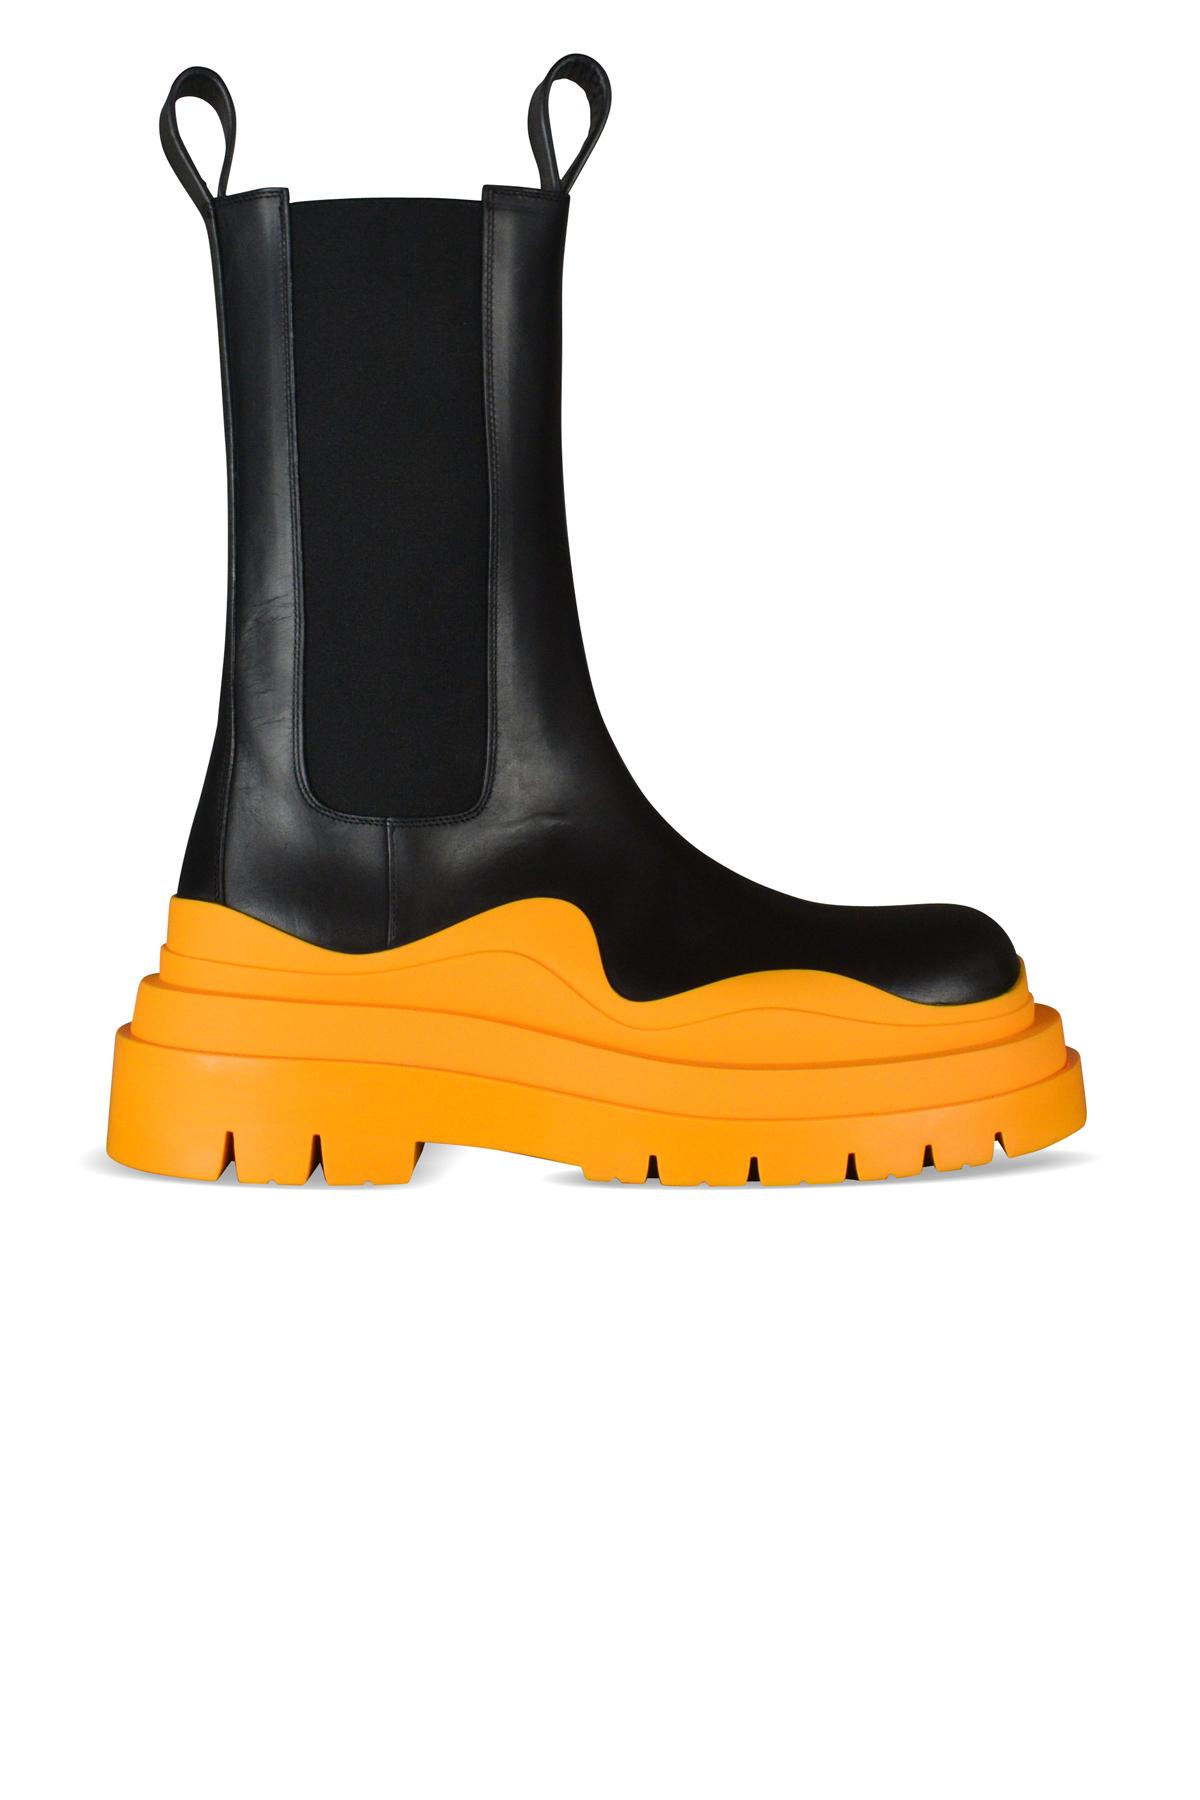 Bottega Veneta Leather Tire Boots in Orange | Lyst